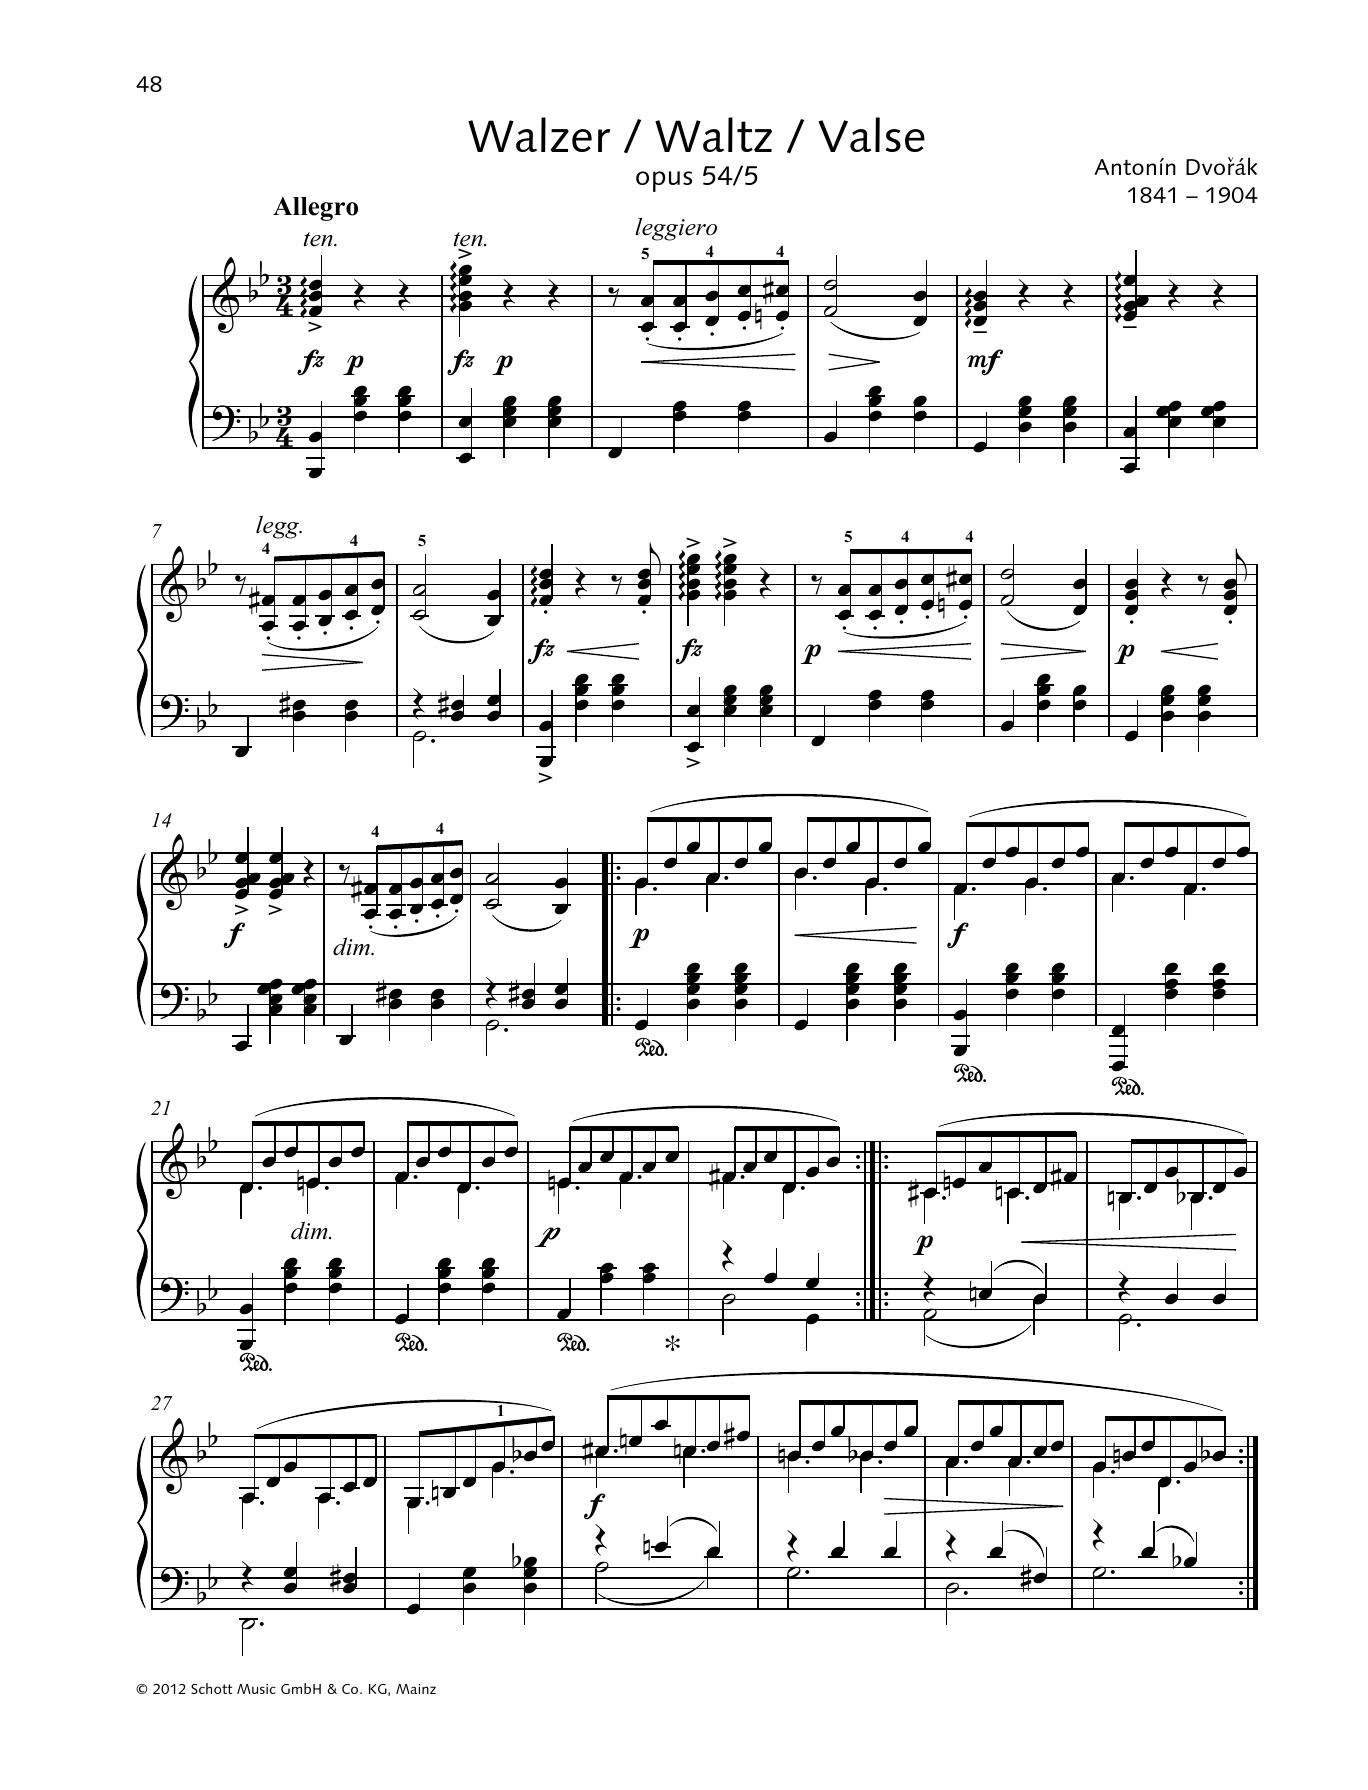 Antonín Dvorák Waltz sheet music notes and chords arranged for Piano Solo